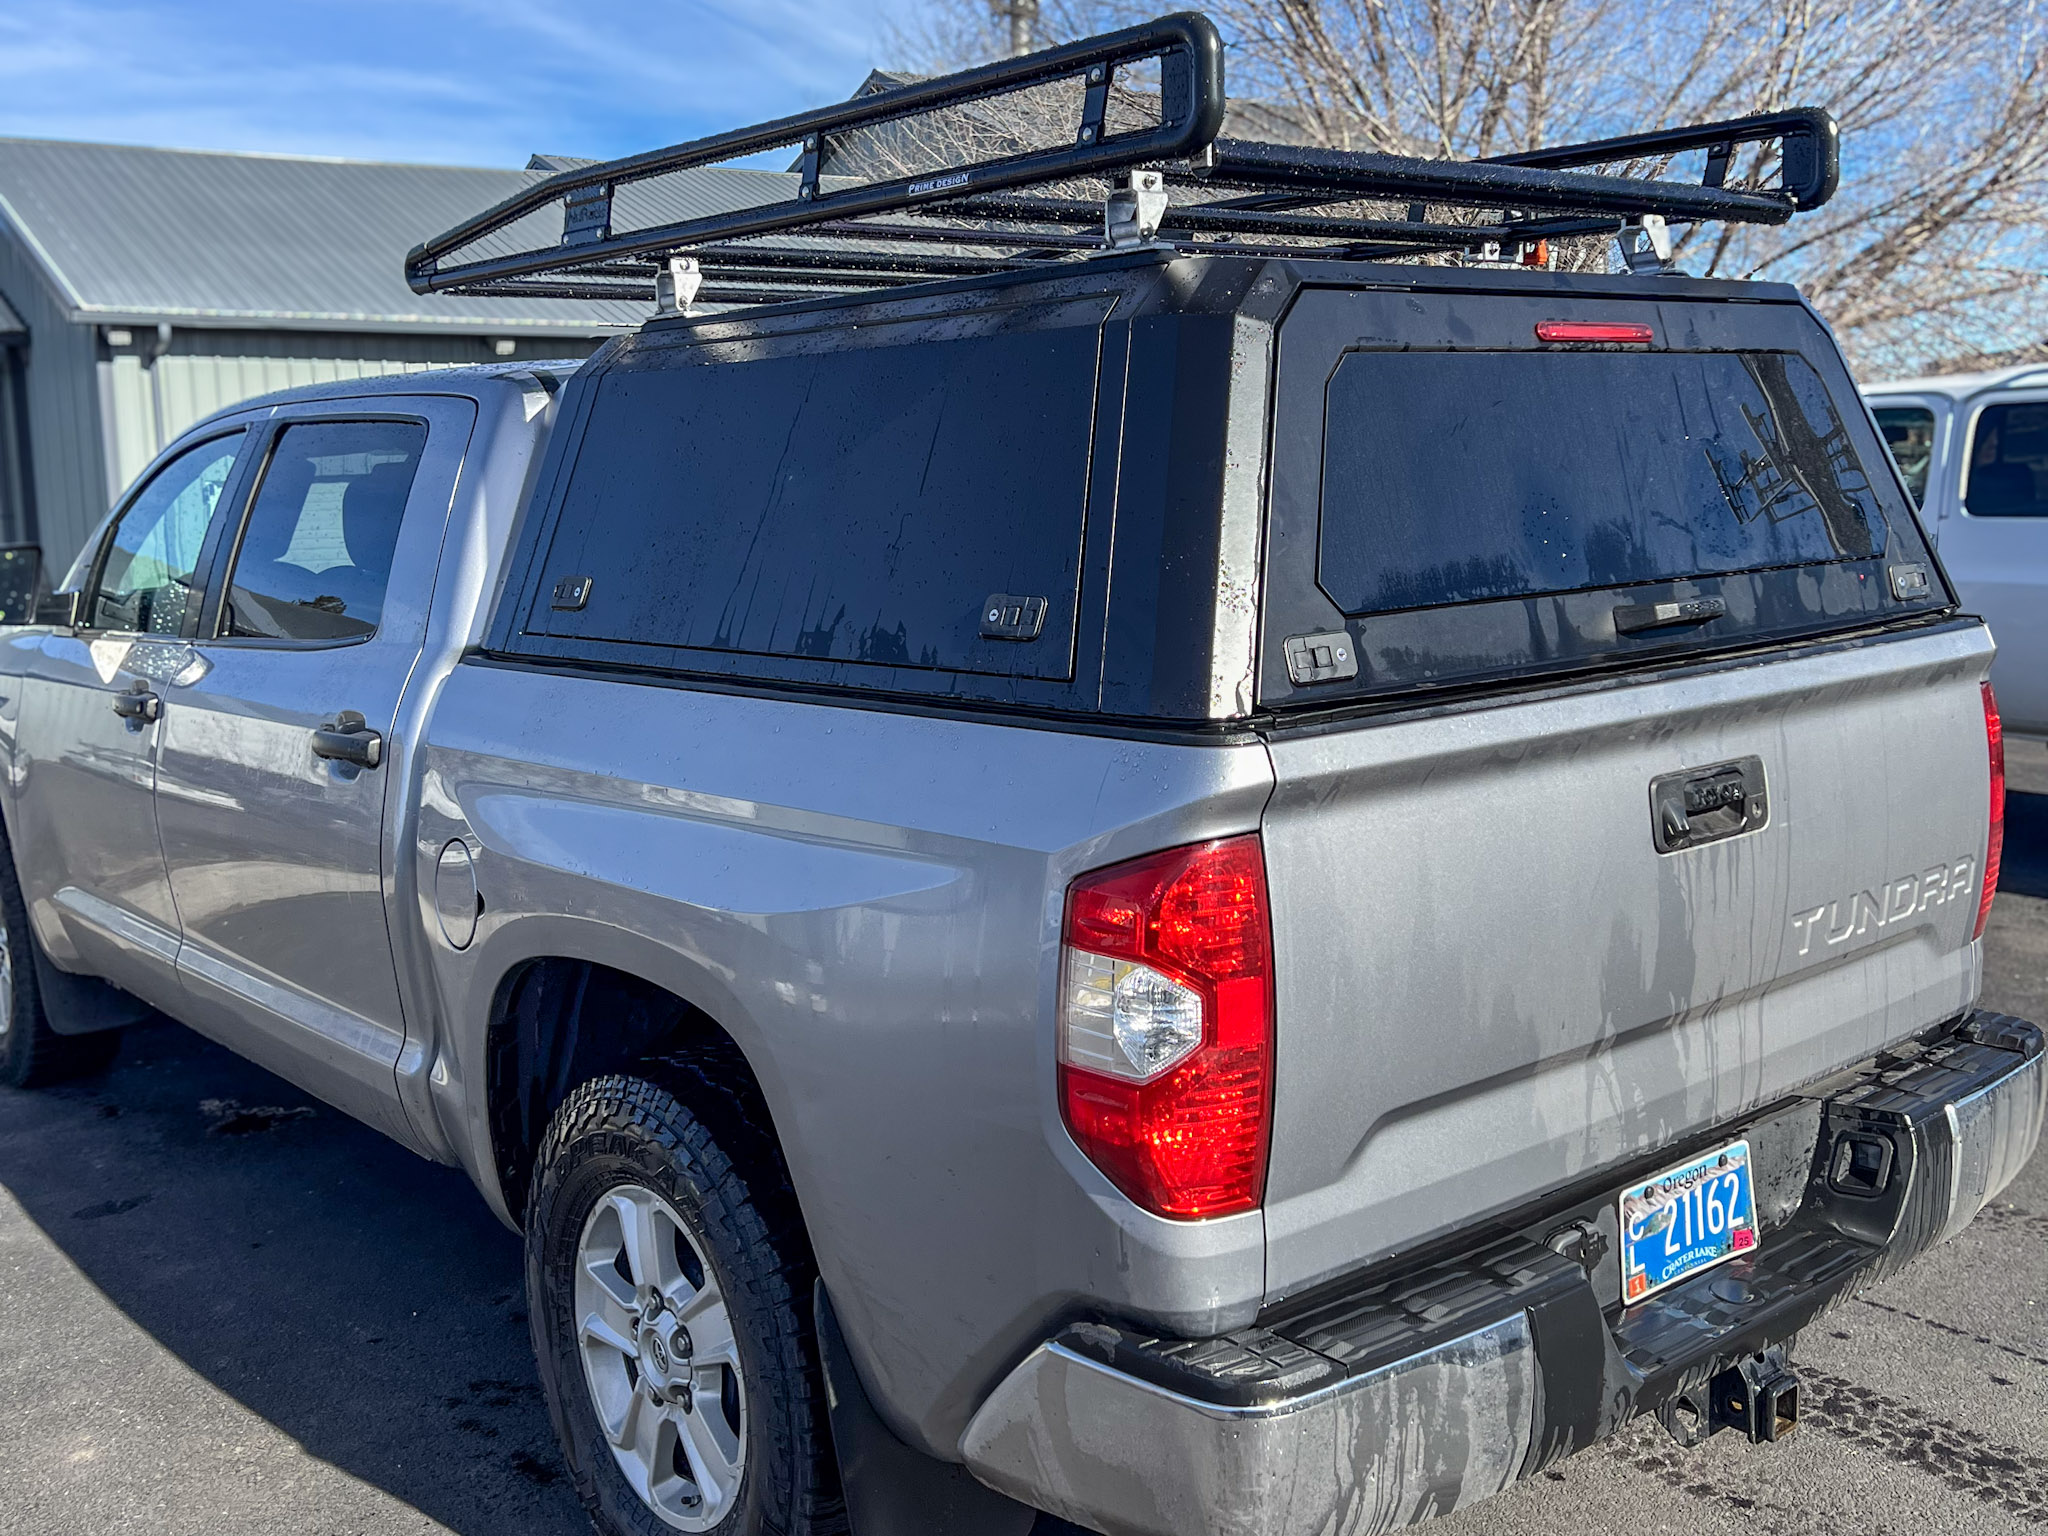 2020 Toyota Tundra Crew Max - Canopy and Lumber Rack - RSI Smartcap / Prime Design